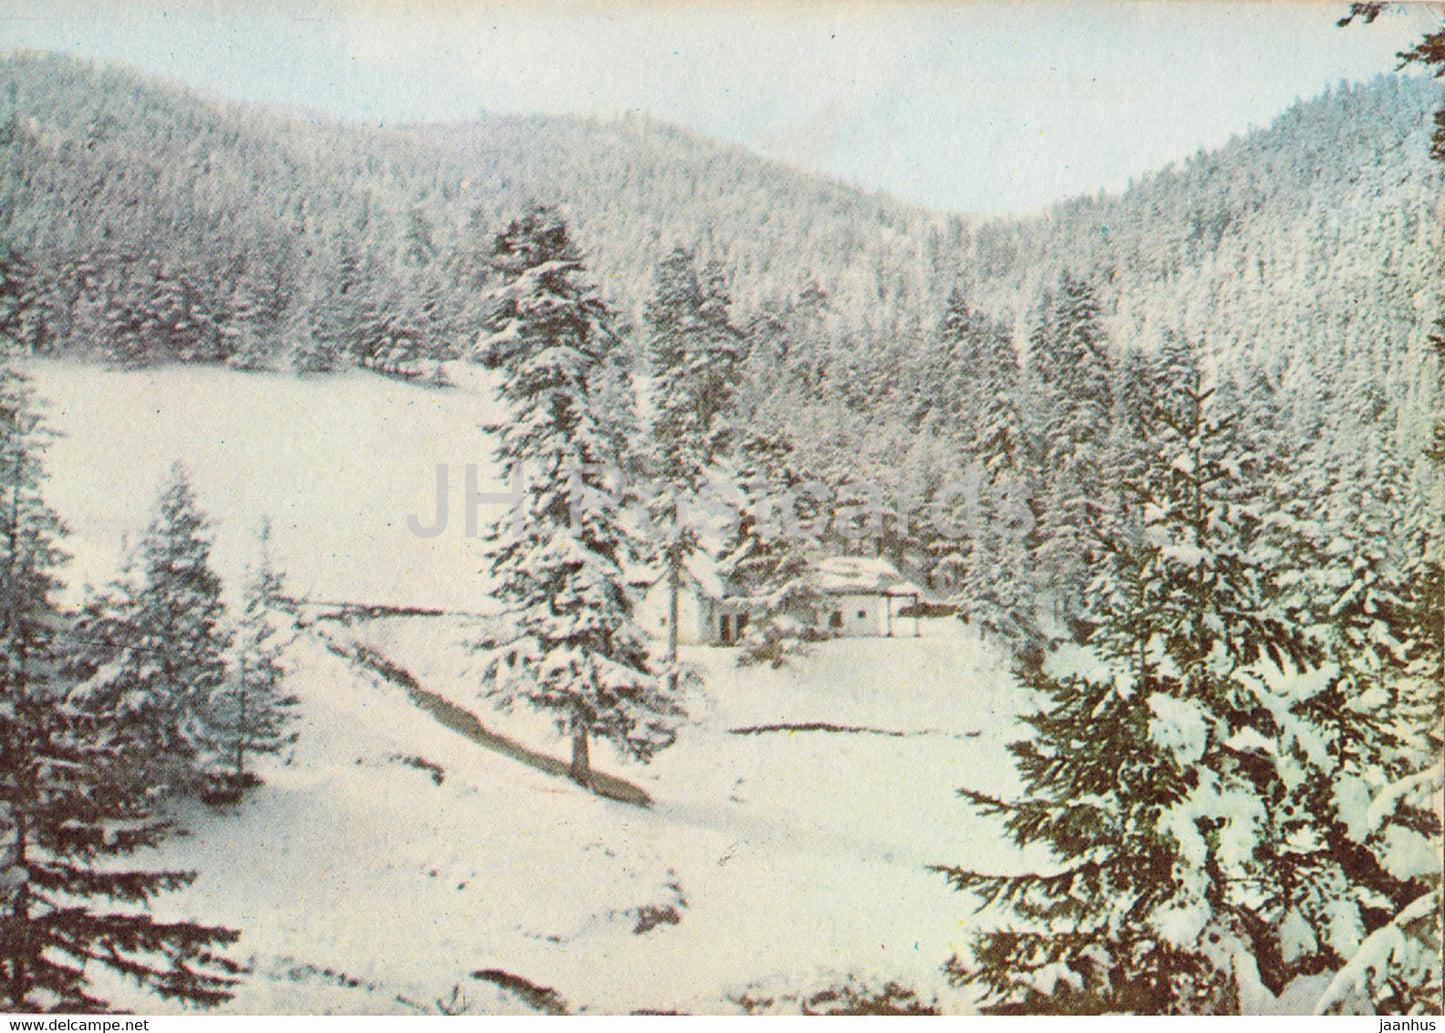 Gumushane - winter view - 1987 - Turkey - used - JH Postcards